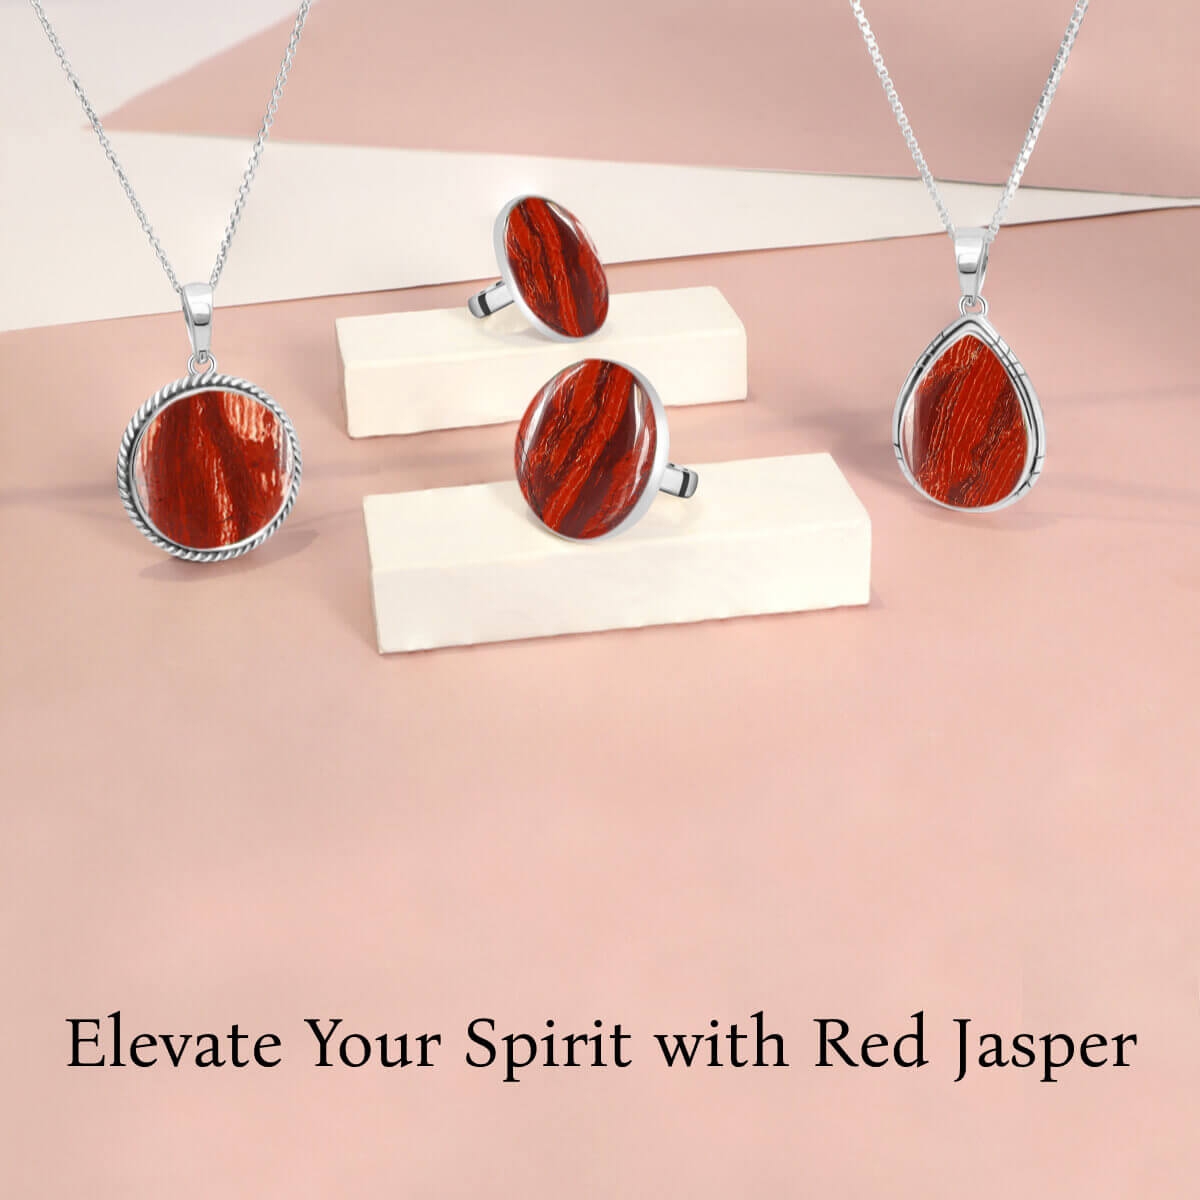 Does Red Jasper Help in Spiritual Healing?